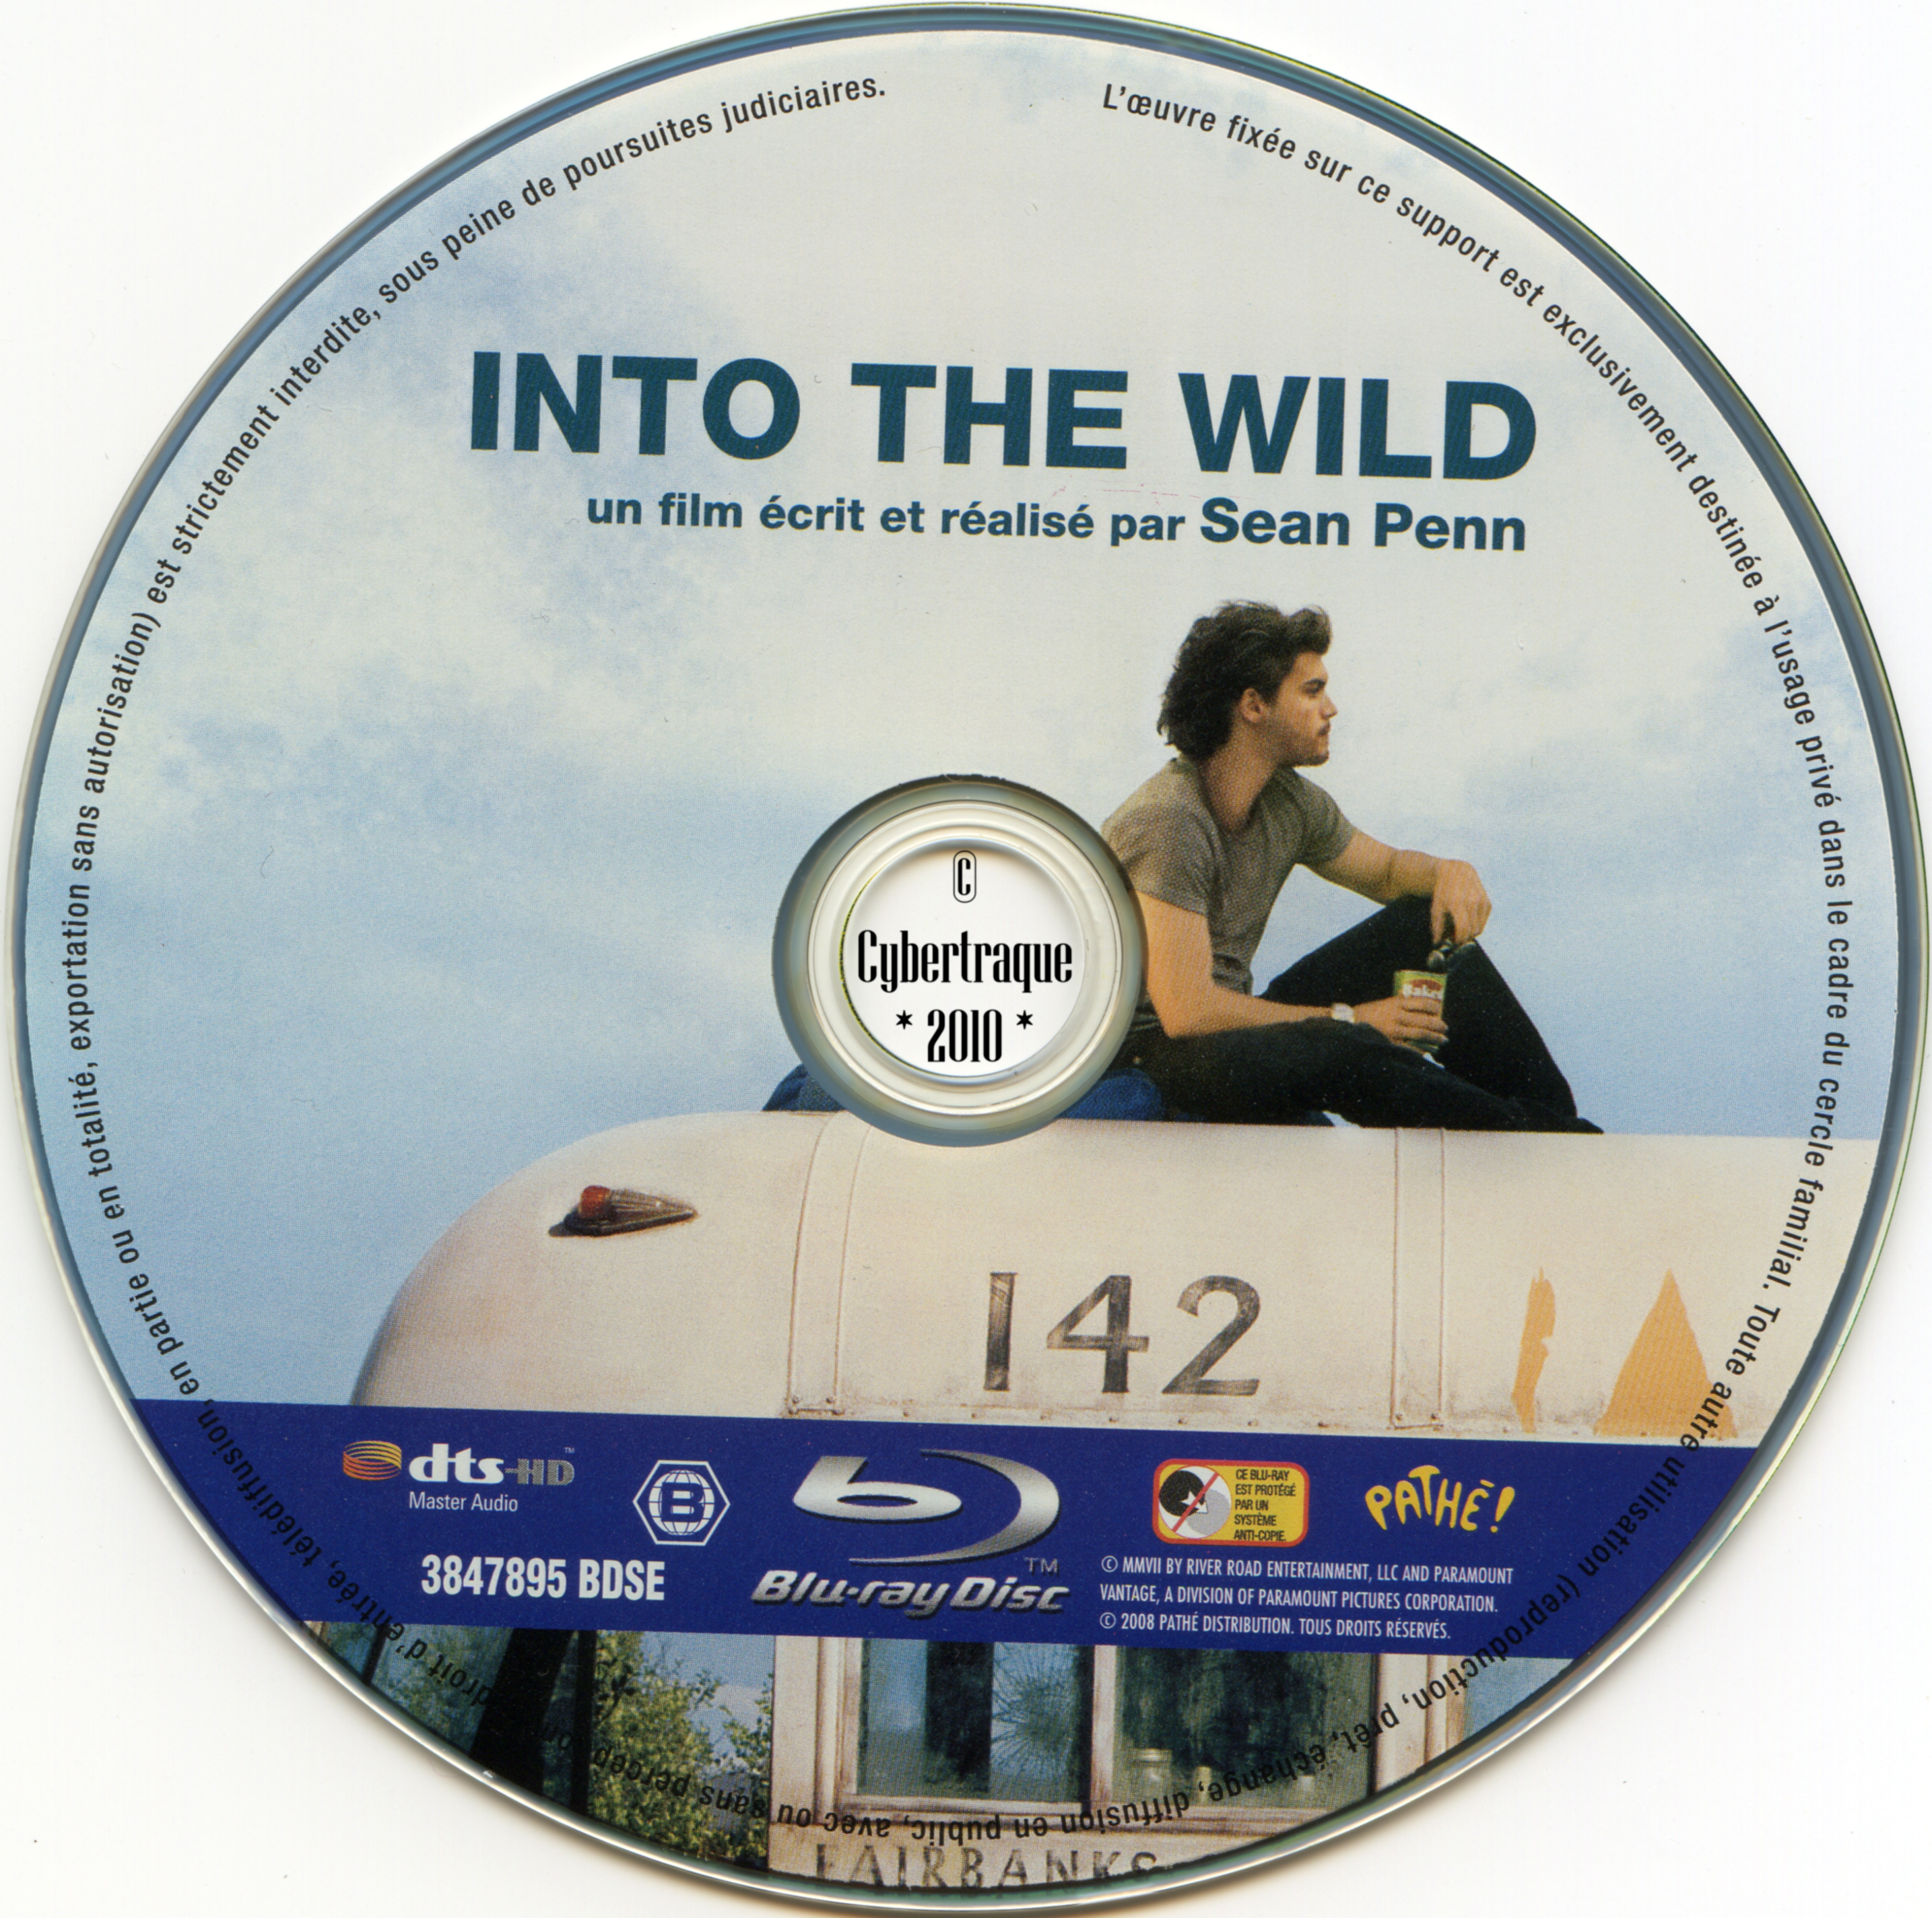 Into the wild (BLU-RAY)